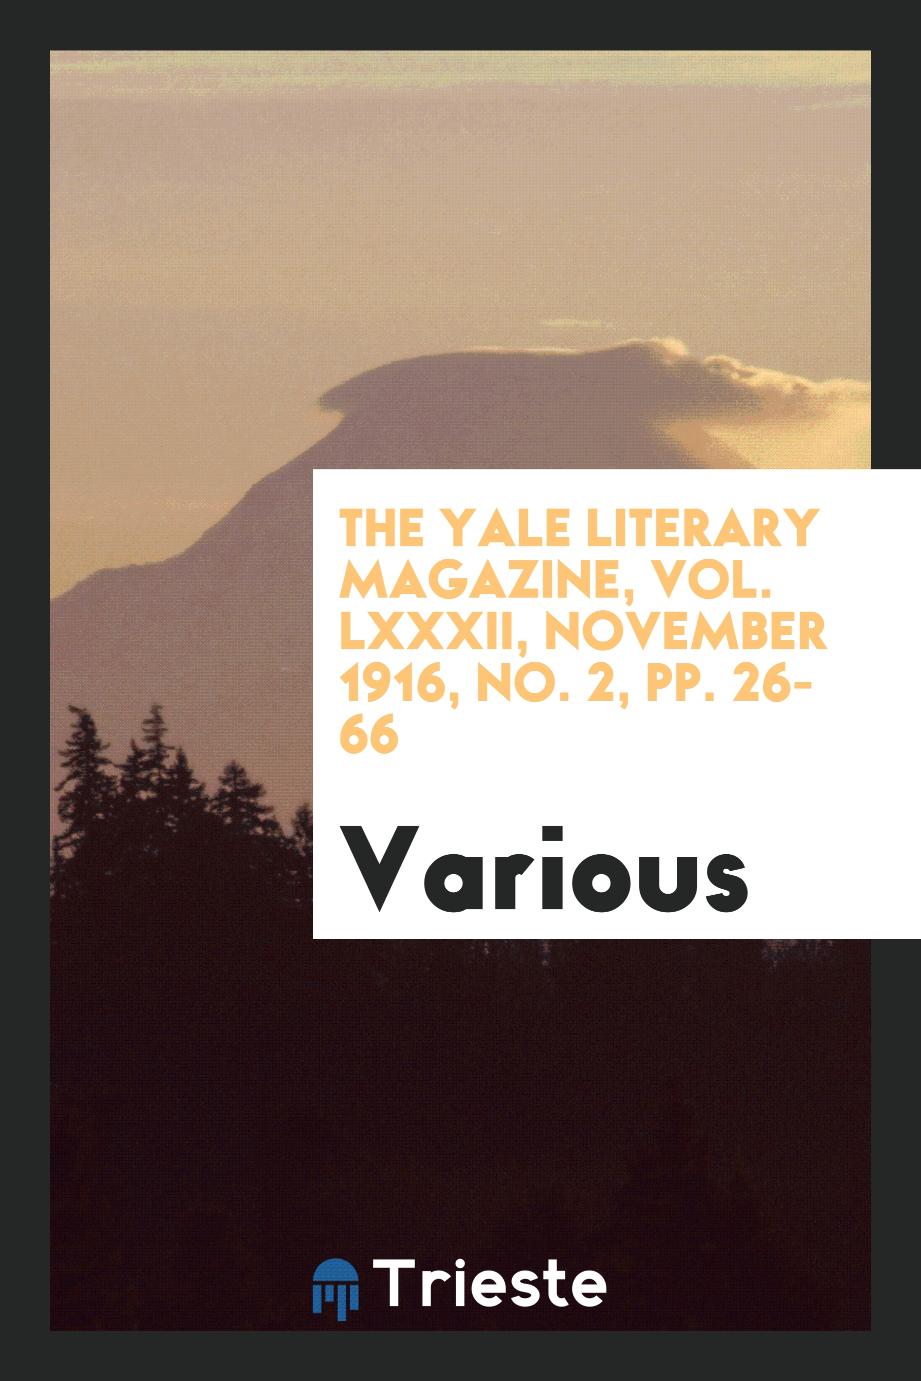 The Yale literary magazine, Vol. LXXXII, November 1916, No. 2, pp. 26-66